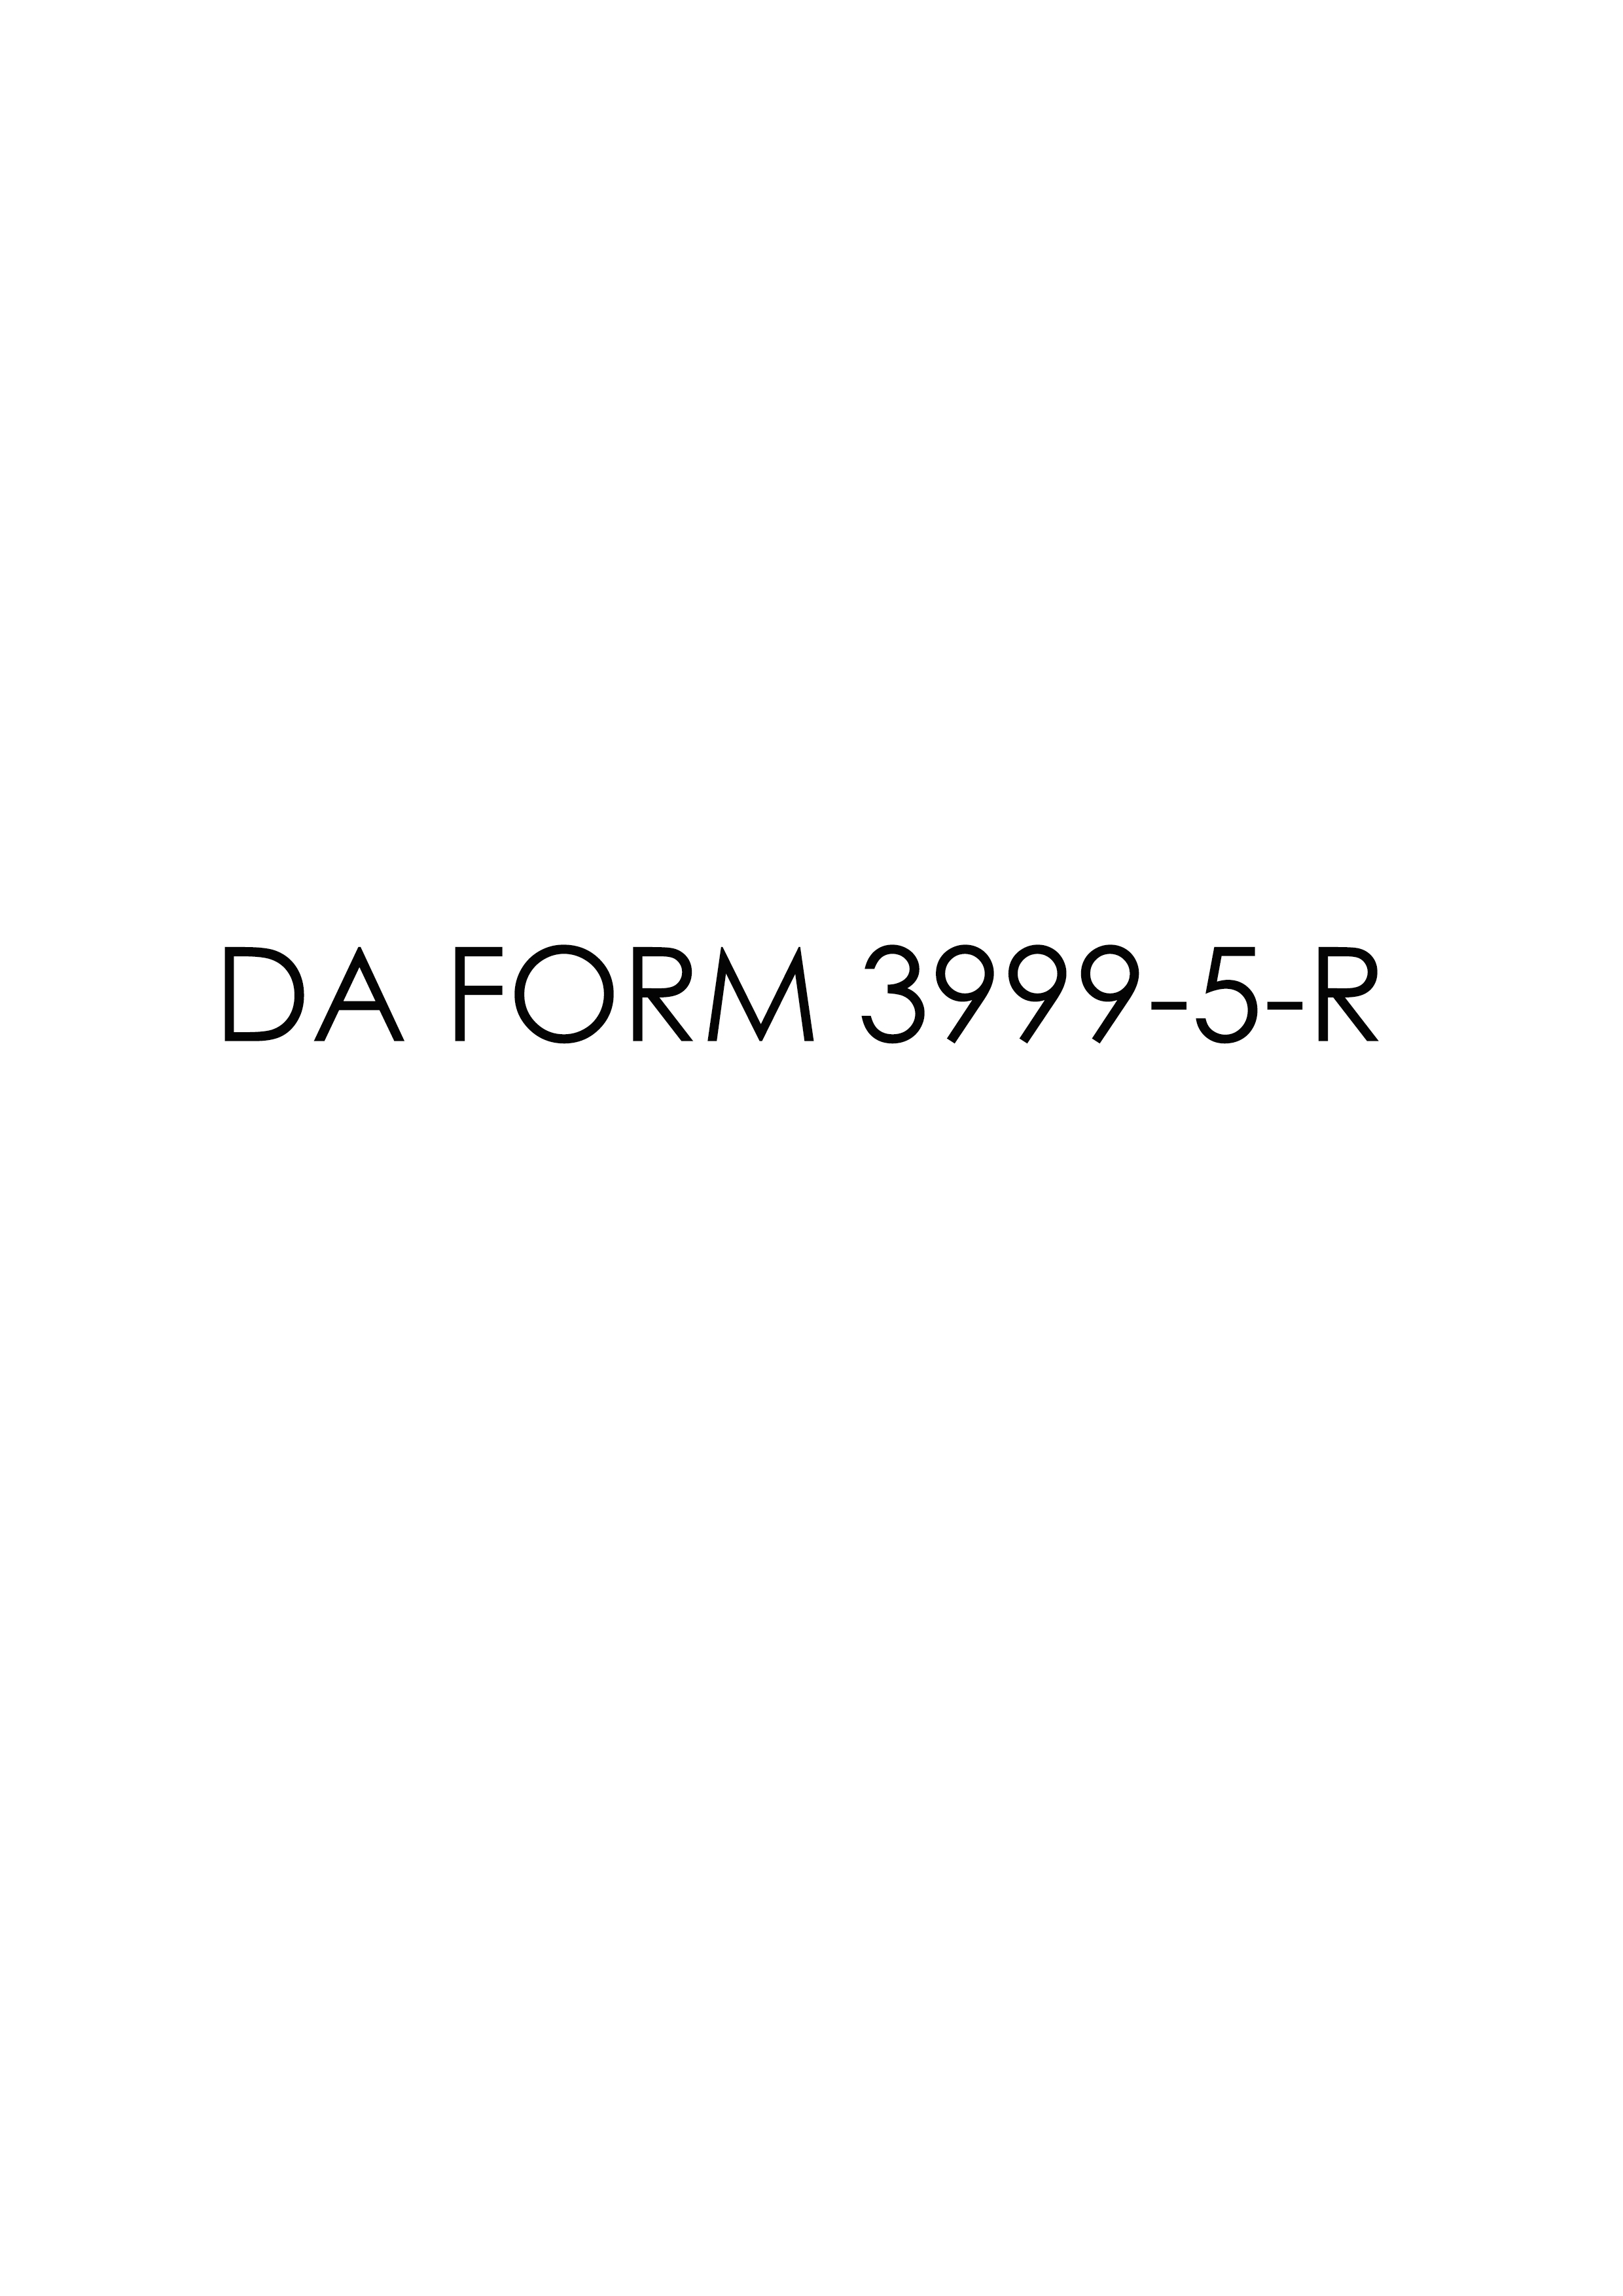 da Form 3999-5-R fillable